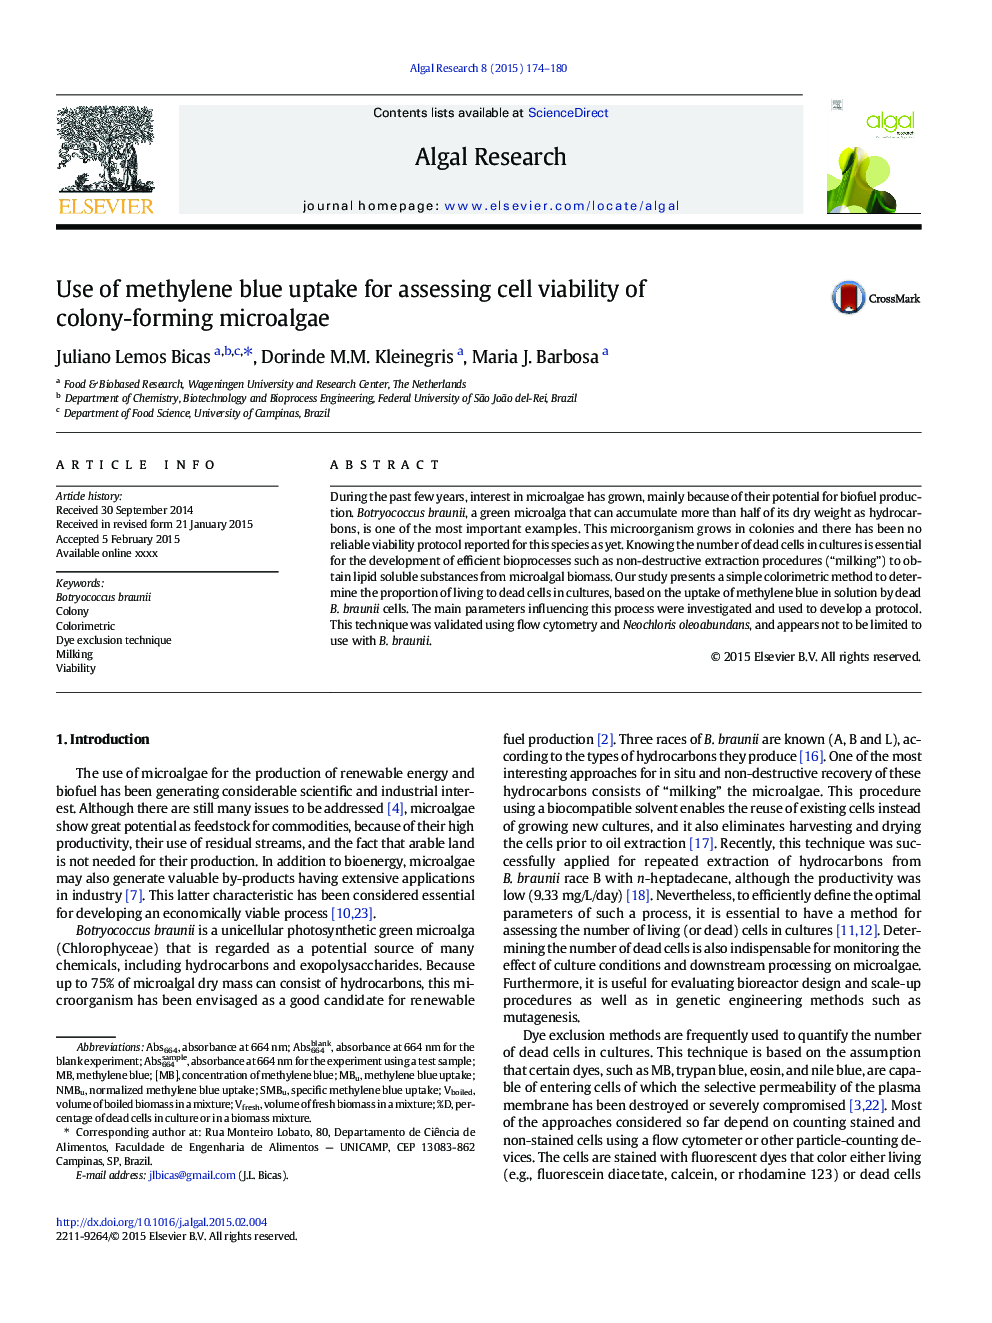 Use of methylene blue uptake for assessing cell viability of colony-forming microalgae